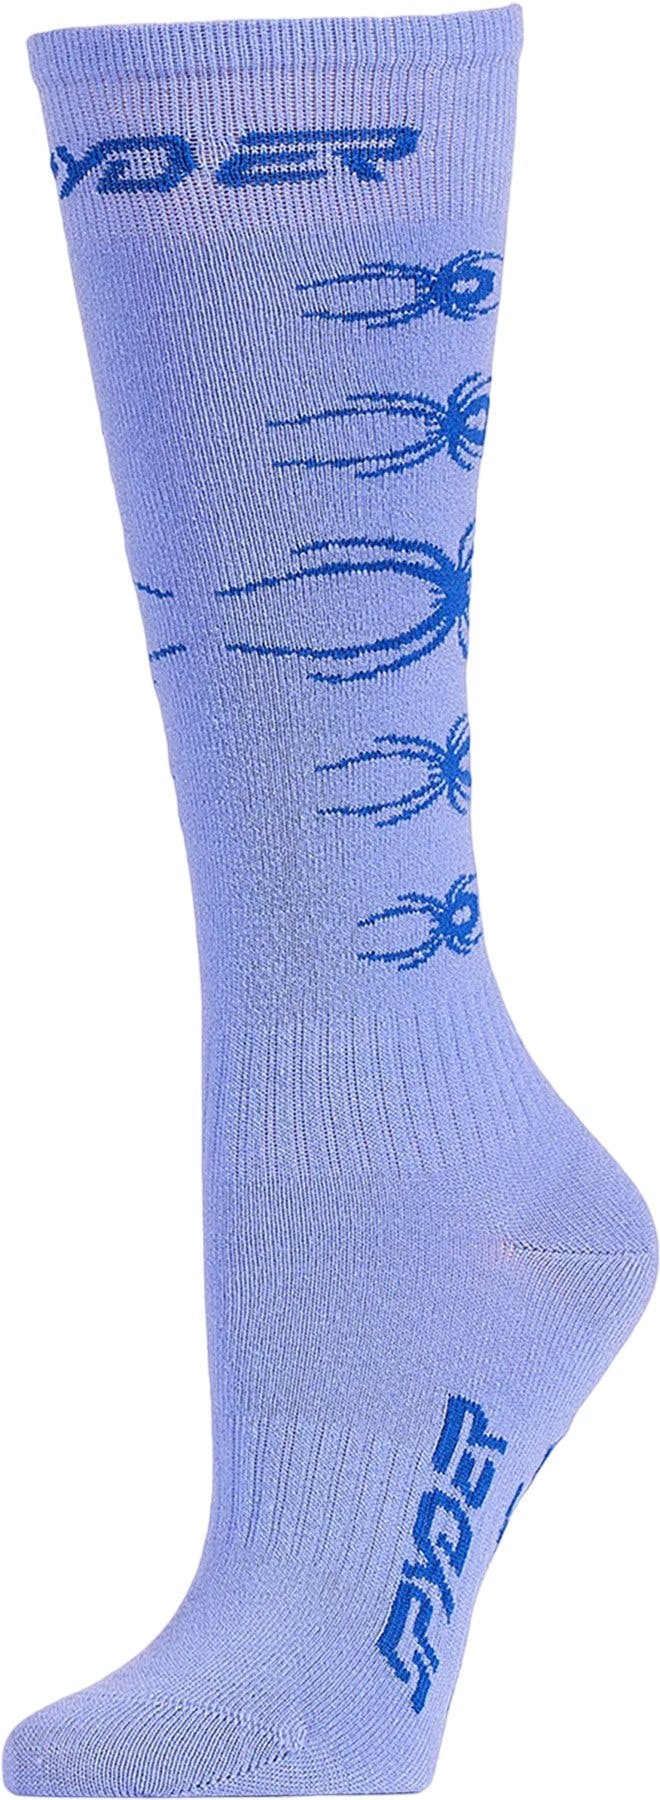 Product image for Bug Liner Ski Socks - Youth